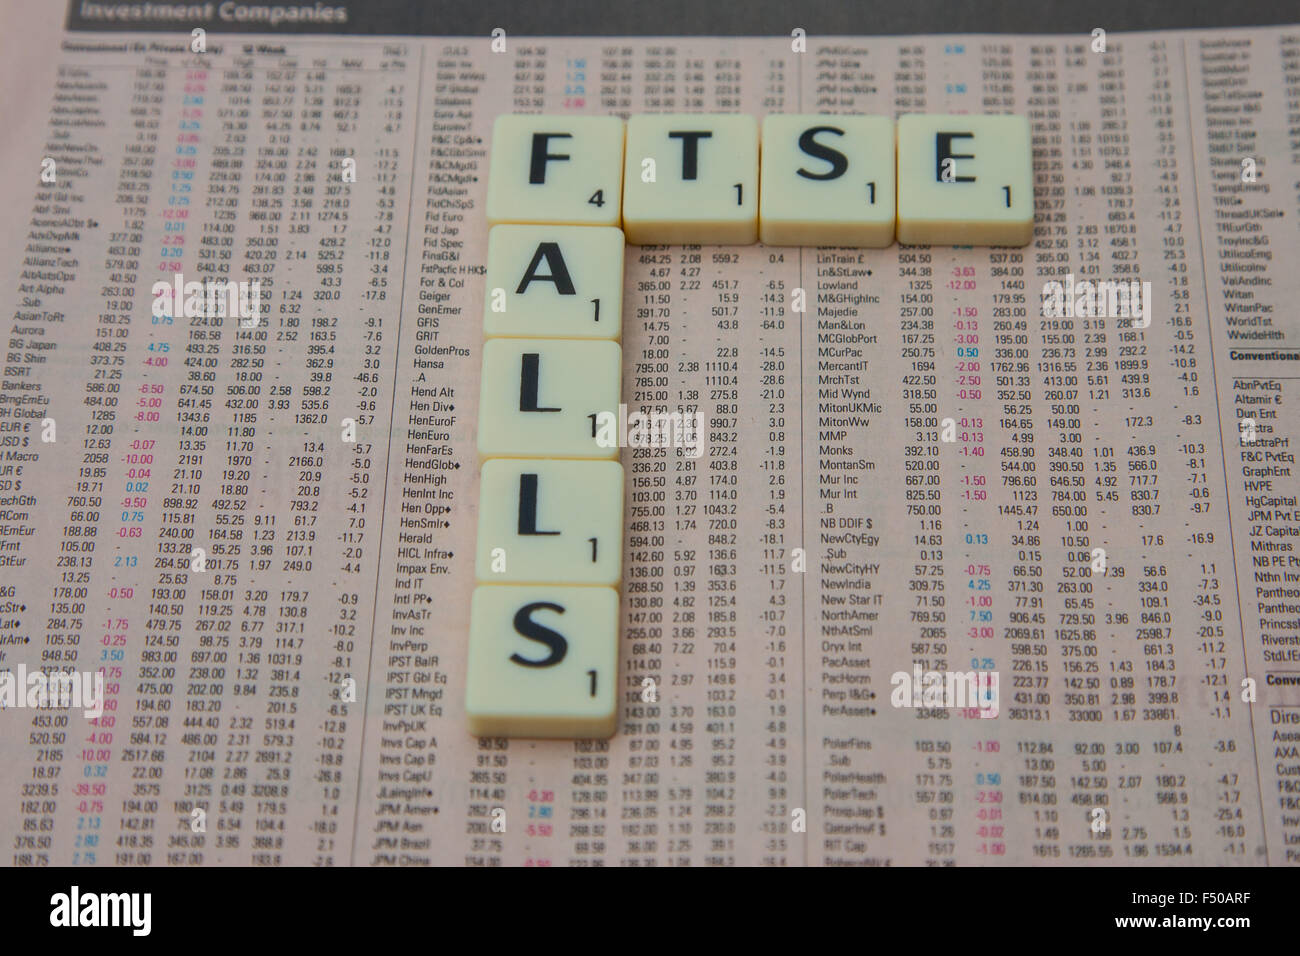 FTSE Falls 1 Foto Stock